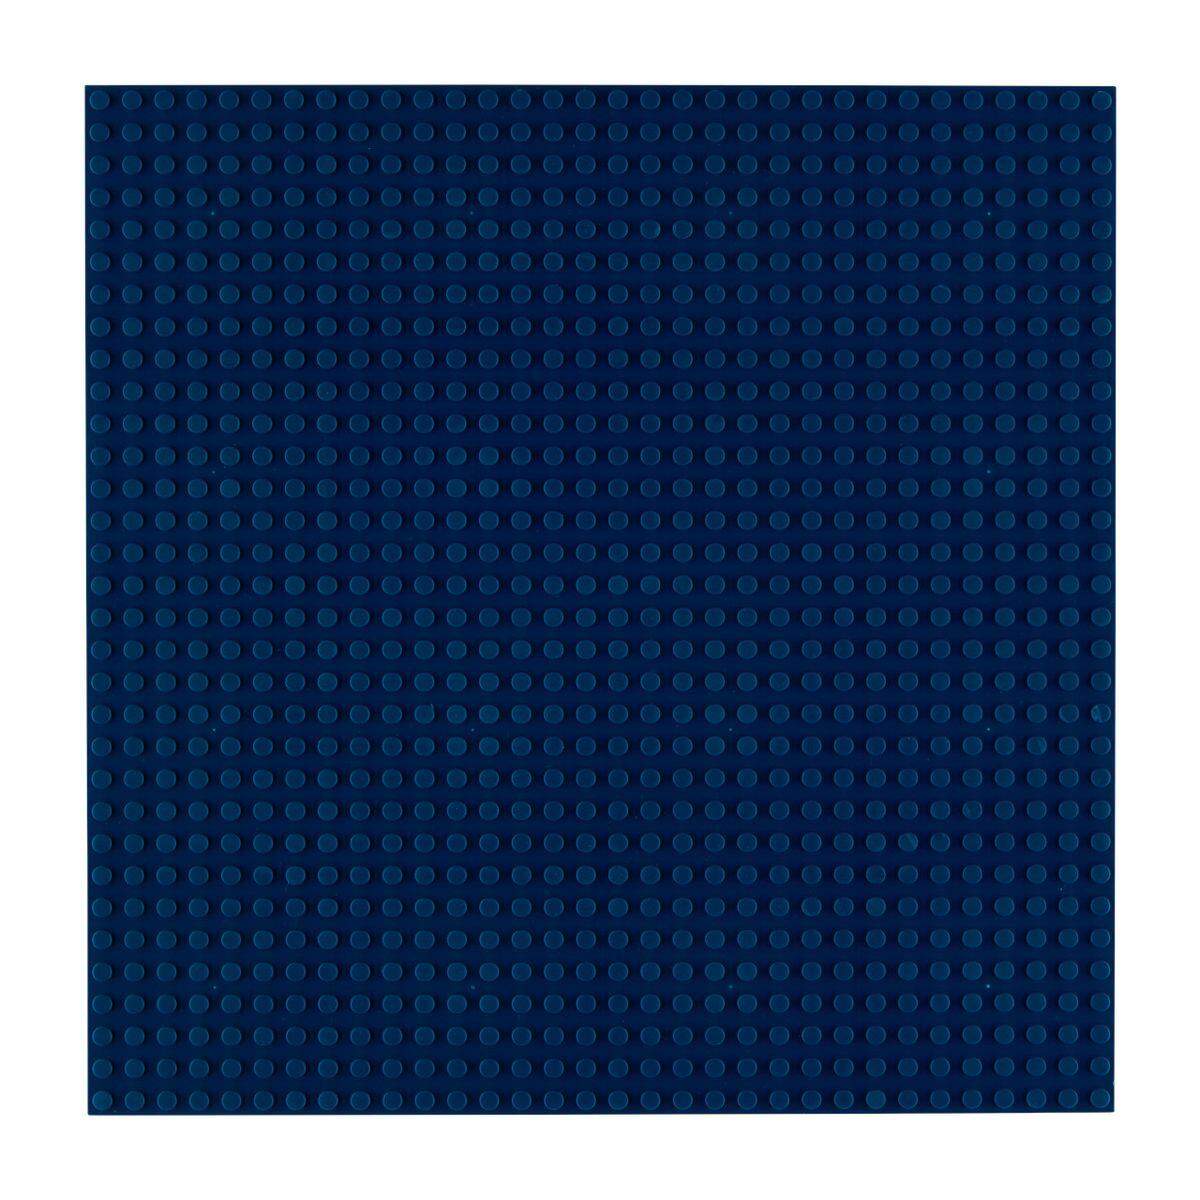 Open Bricks Baseplate 32x32 earth blue/dark blue